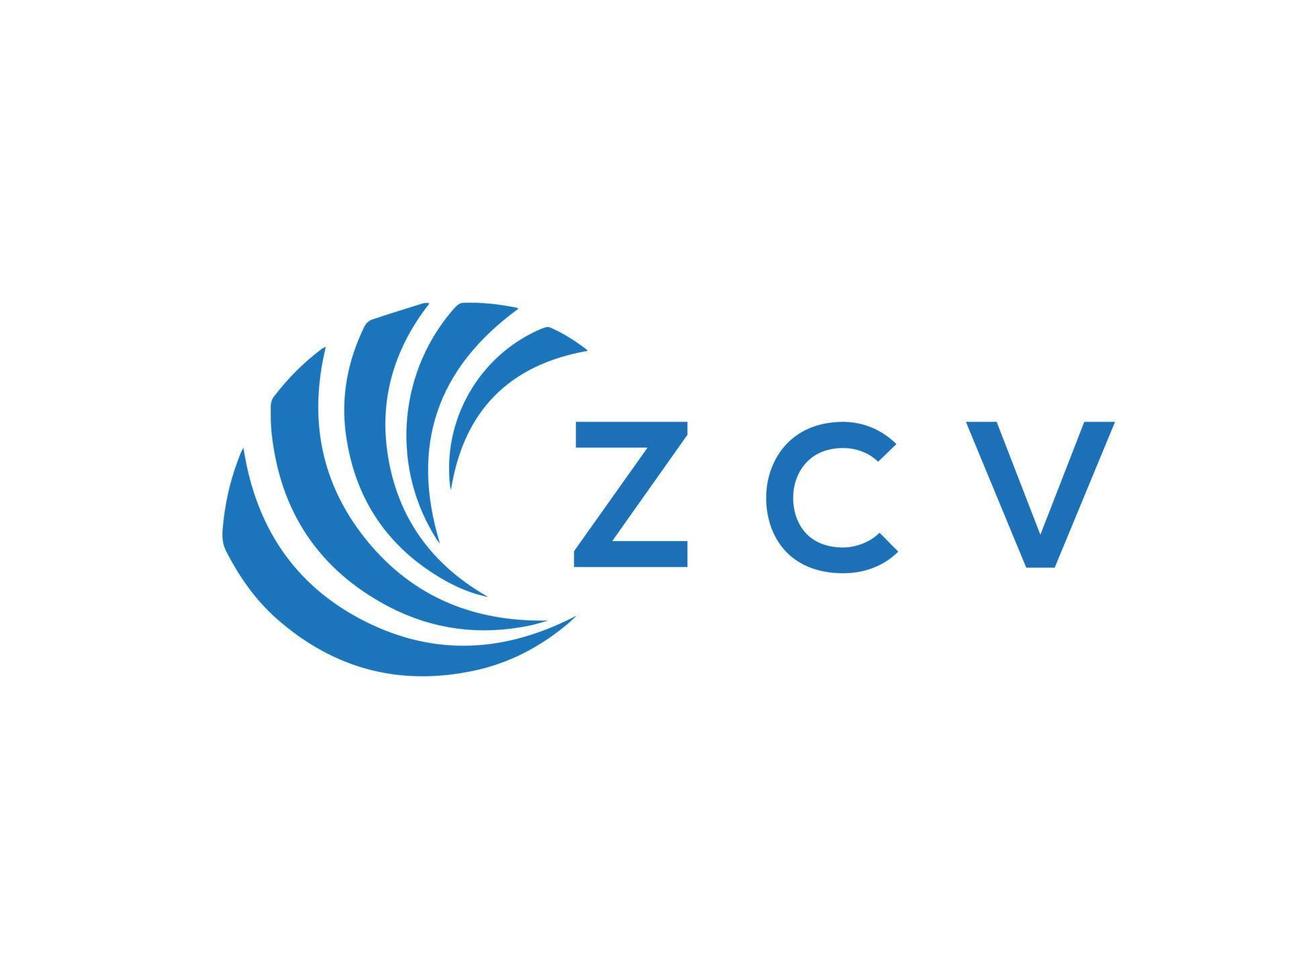 zcv brev logotyp design på vit bakgrund. zcv kreativ cirkel brev logotyp begrepp. zcv brev design. vektor